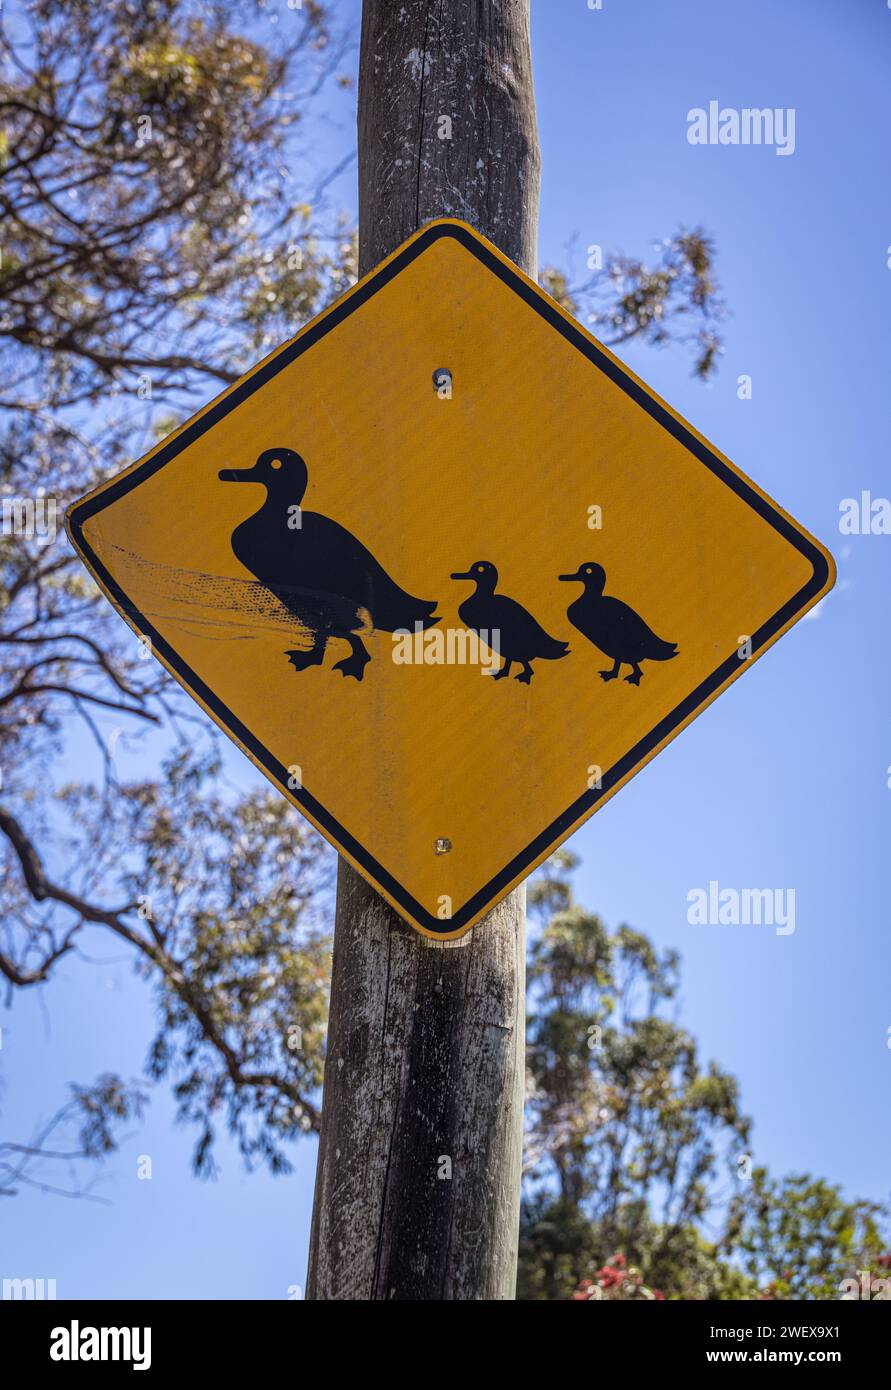 Ducks crossing the road sign, Australia Stock Photo